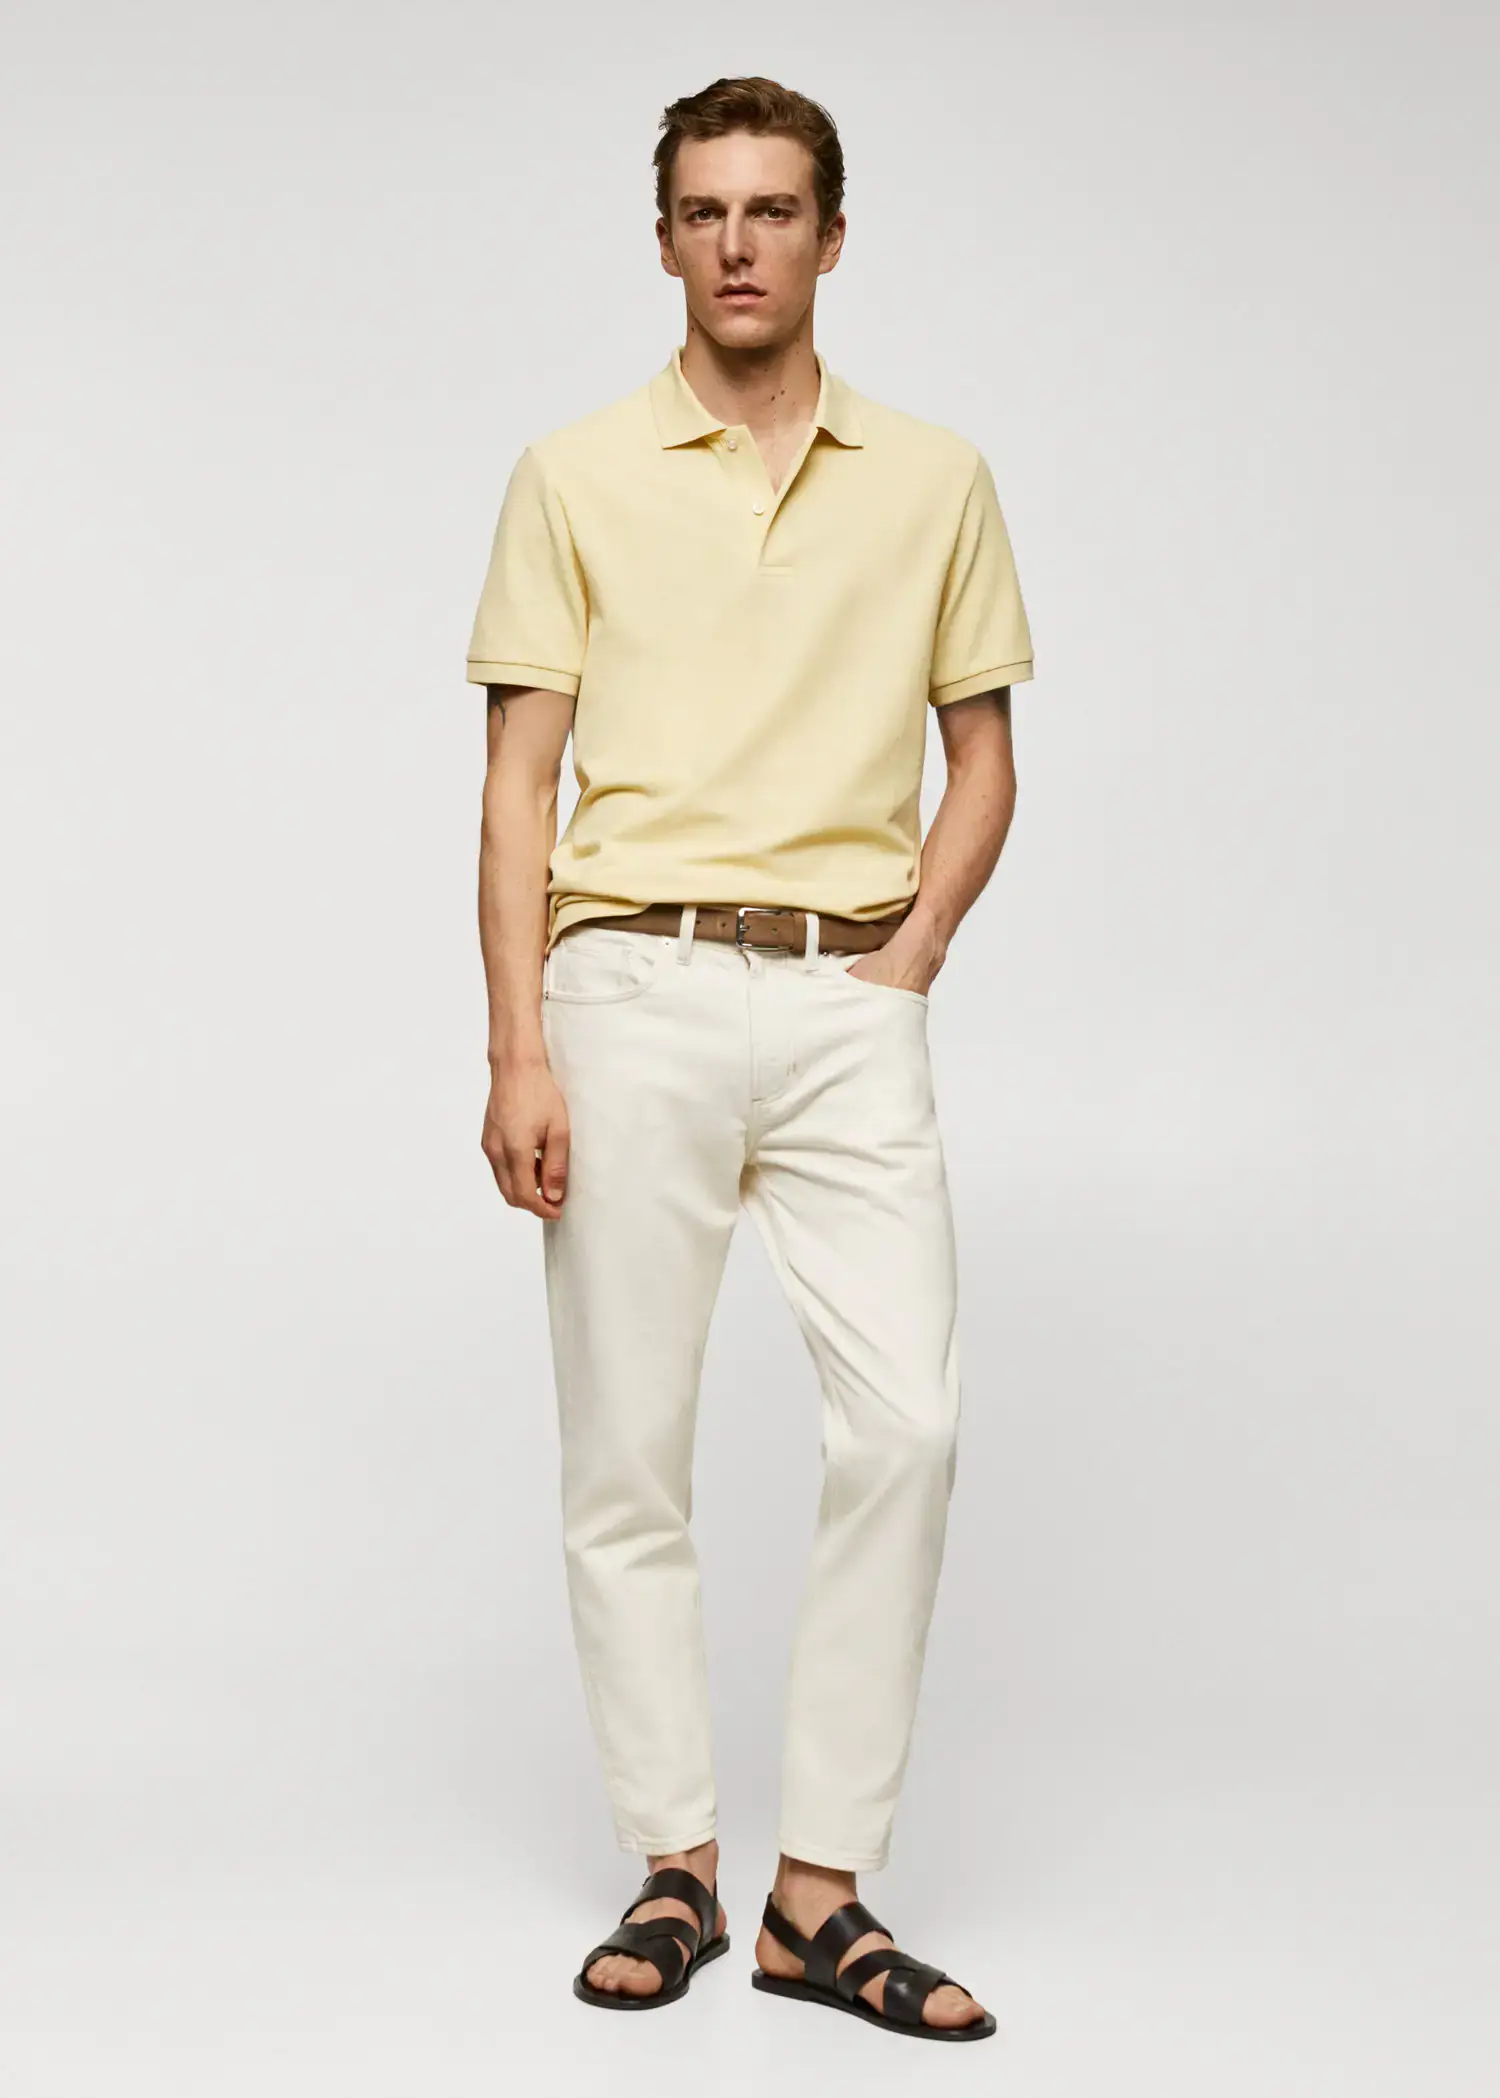 Mango 100% cotton pique polo shirt. a man in a yellow polo shirt and white pants. 